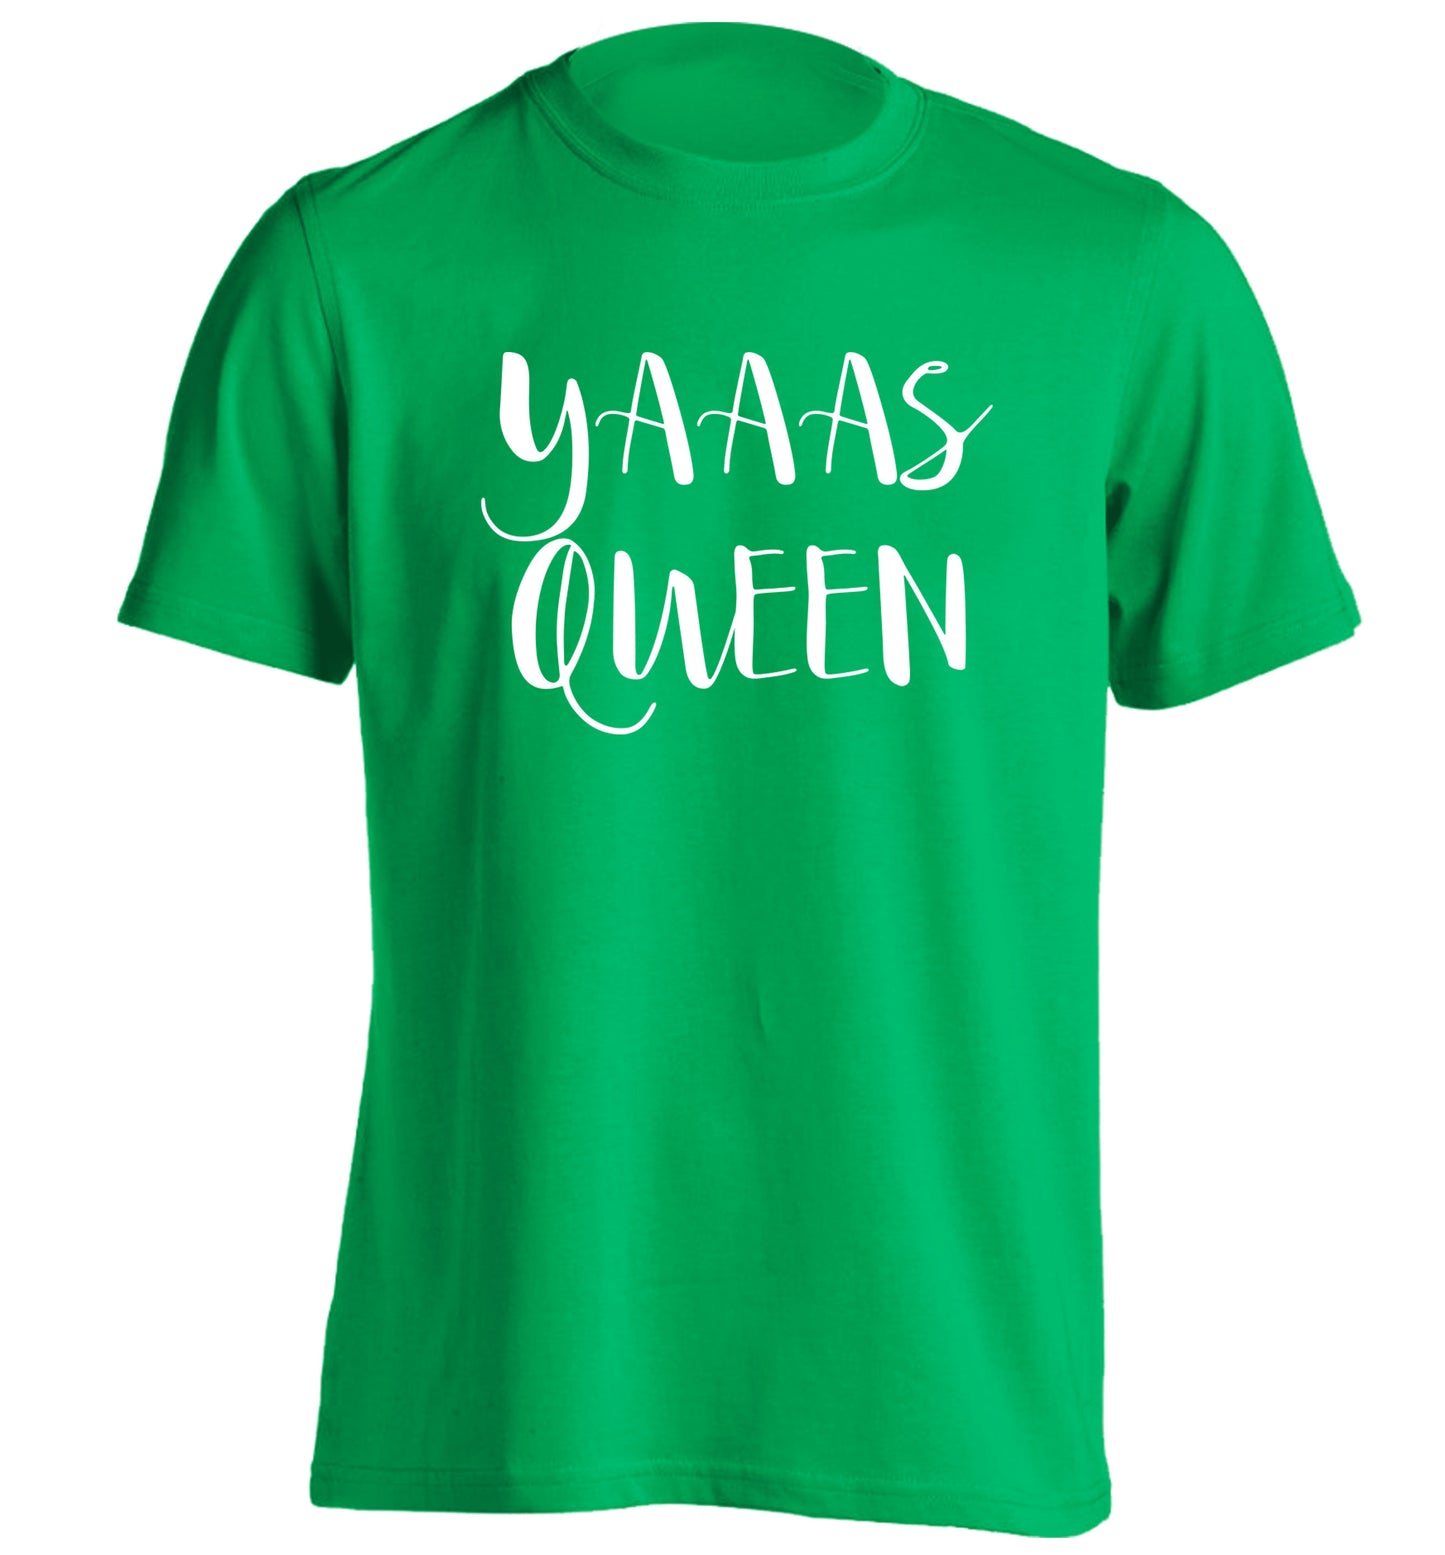 Yas Queen adults unisex green Tshirt 2XL